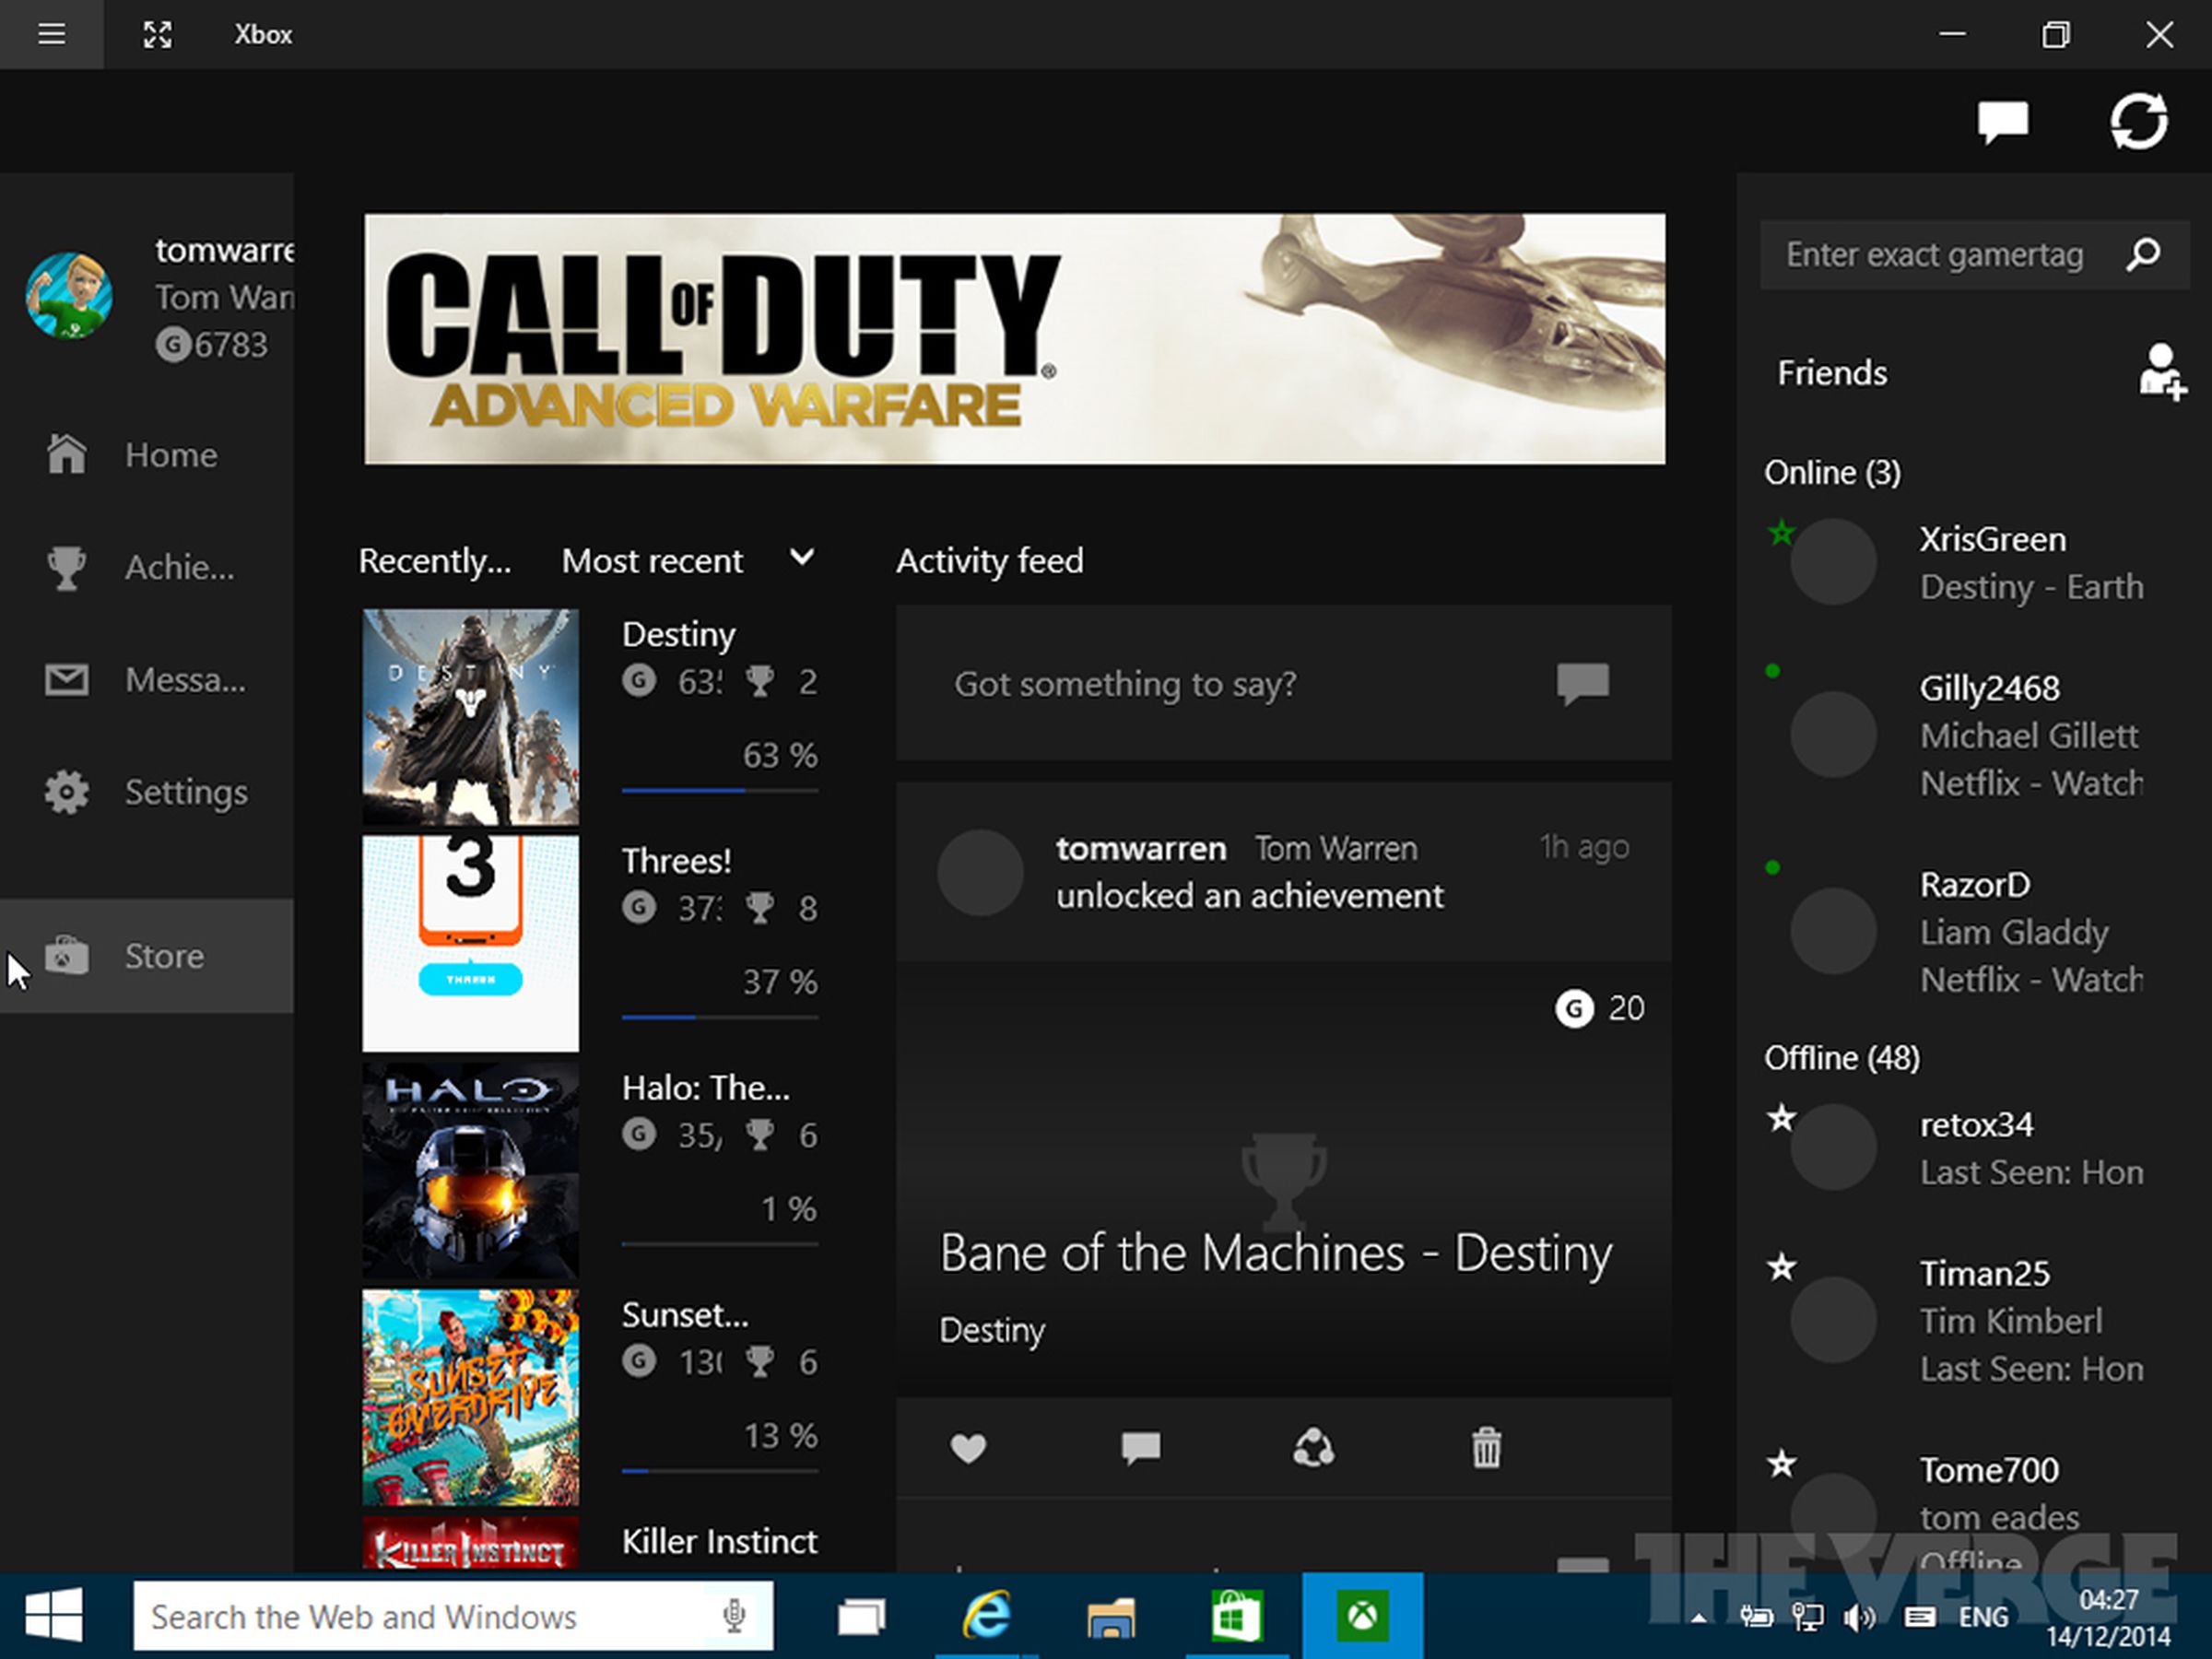 Windows 10 build 9901 screenshots